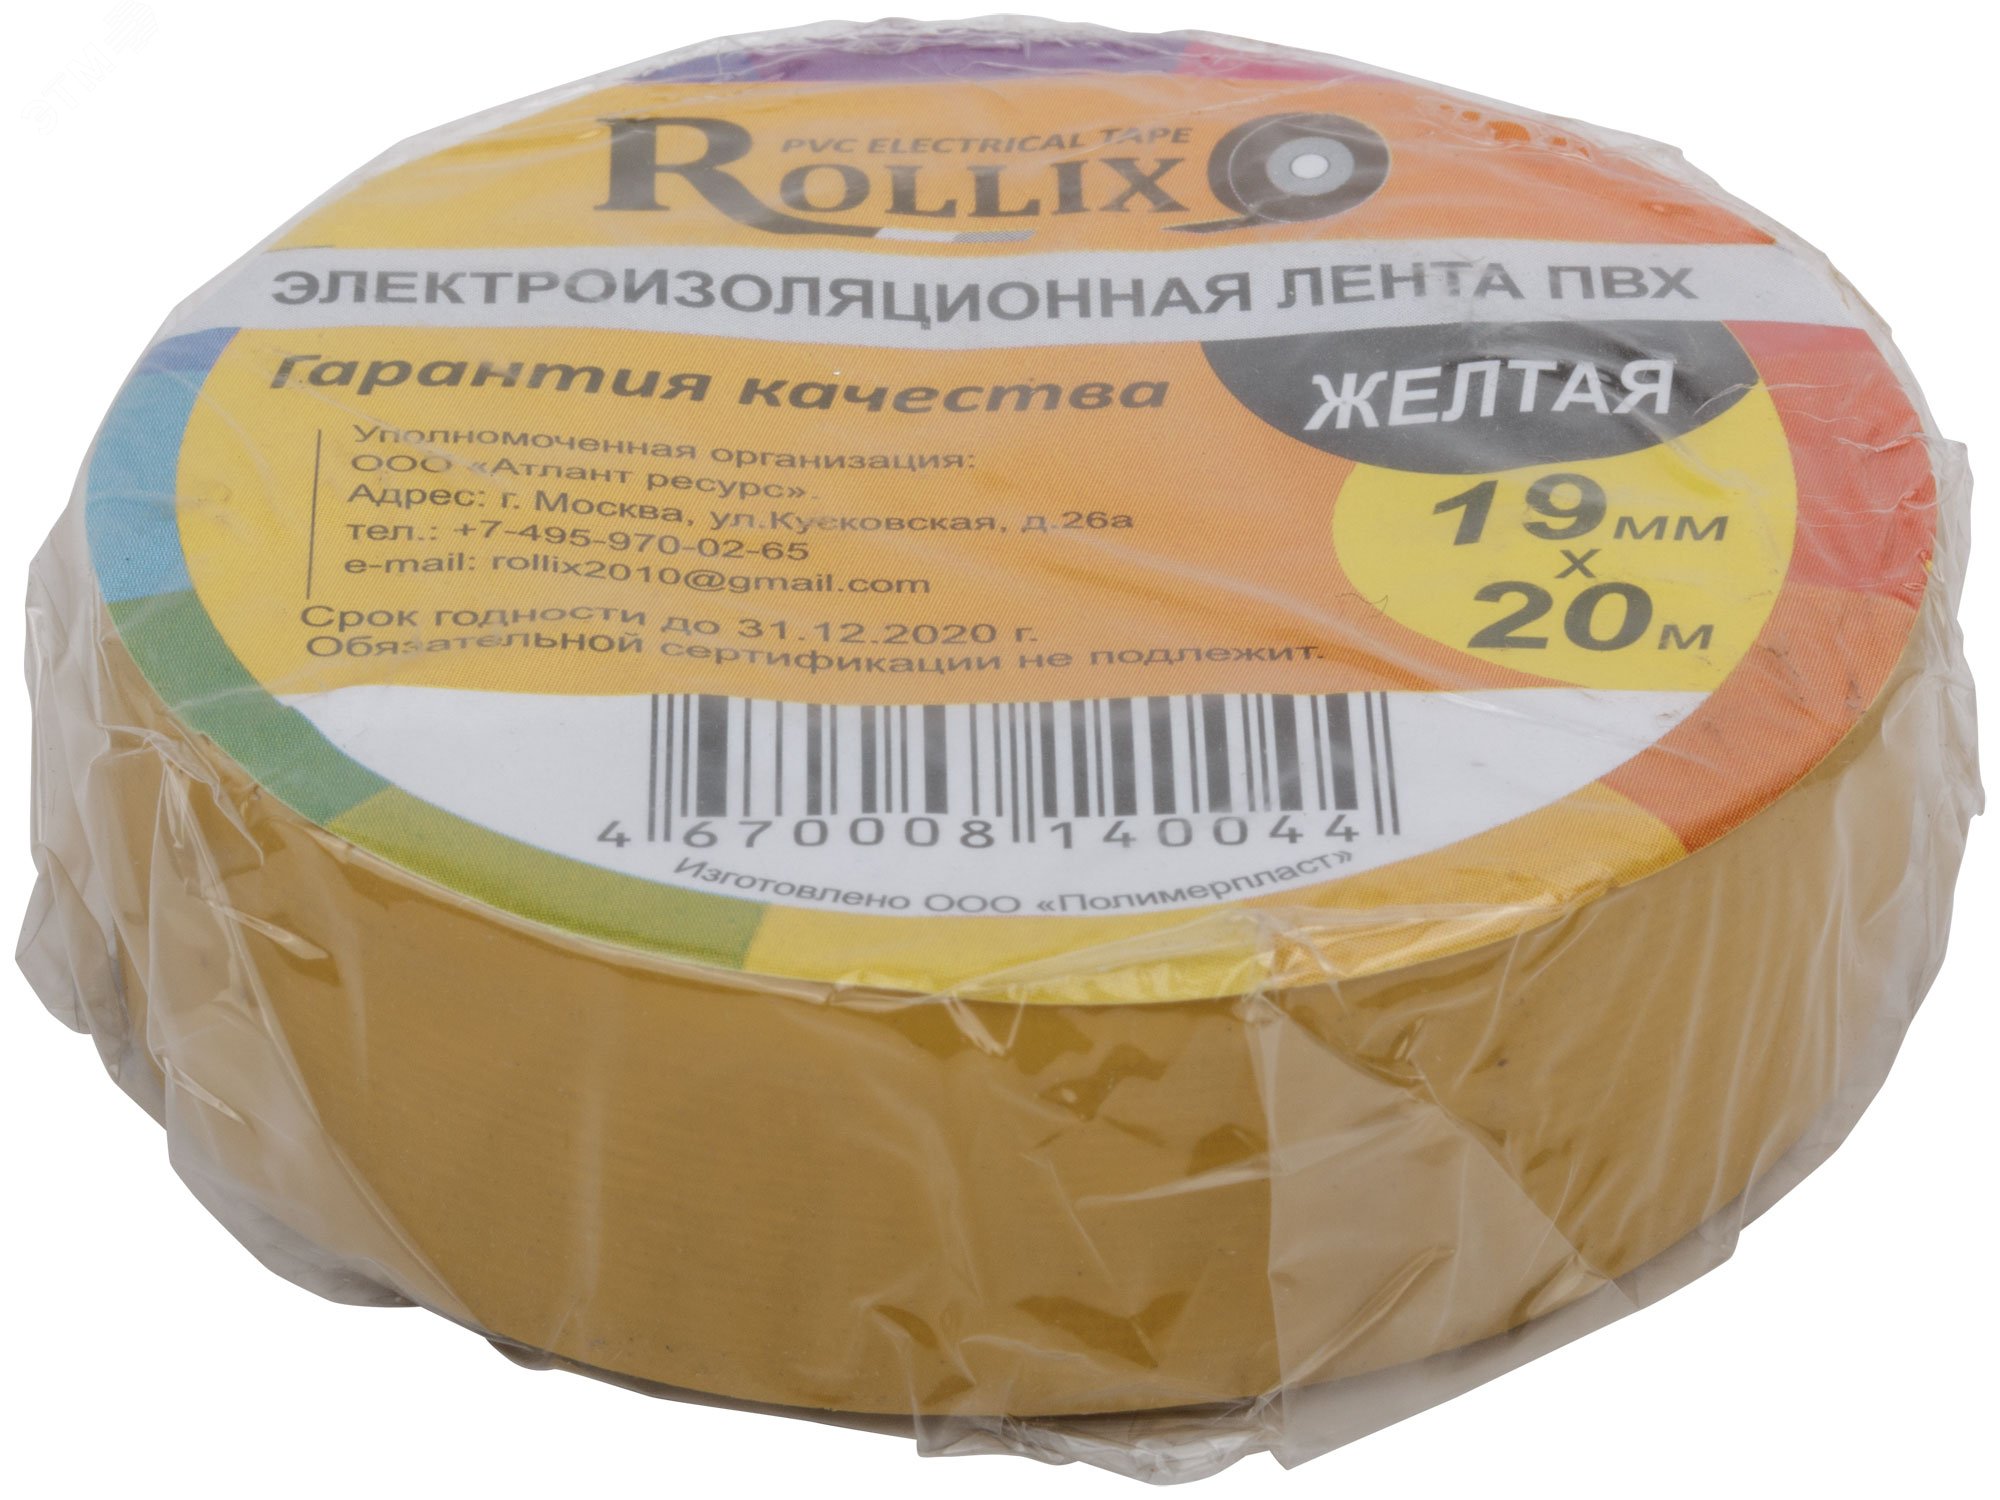 Изолента ROLLIX ПВХ 19 мм x 0,15 мм х 20 м, желтая 11033 РОС - превью 3